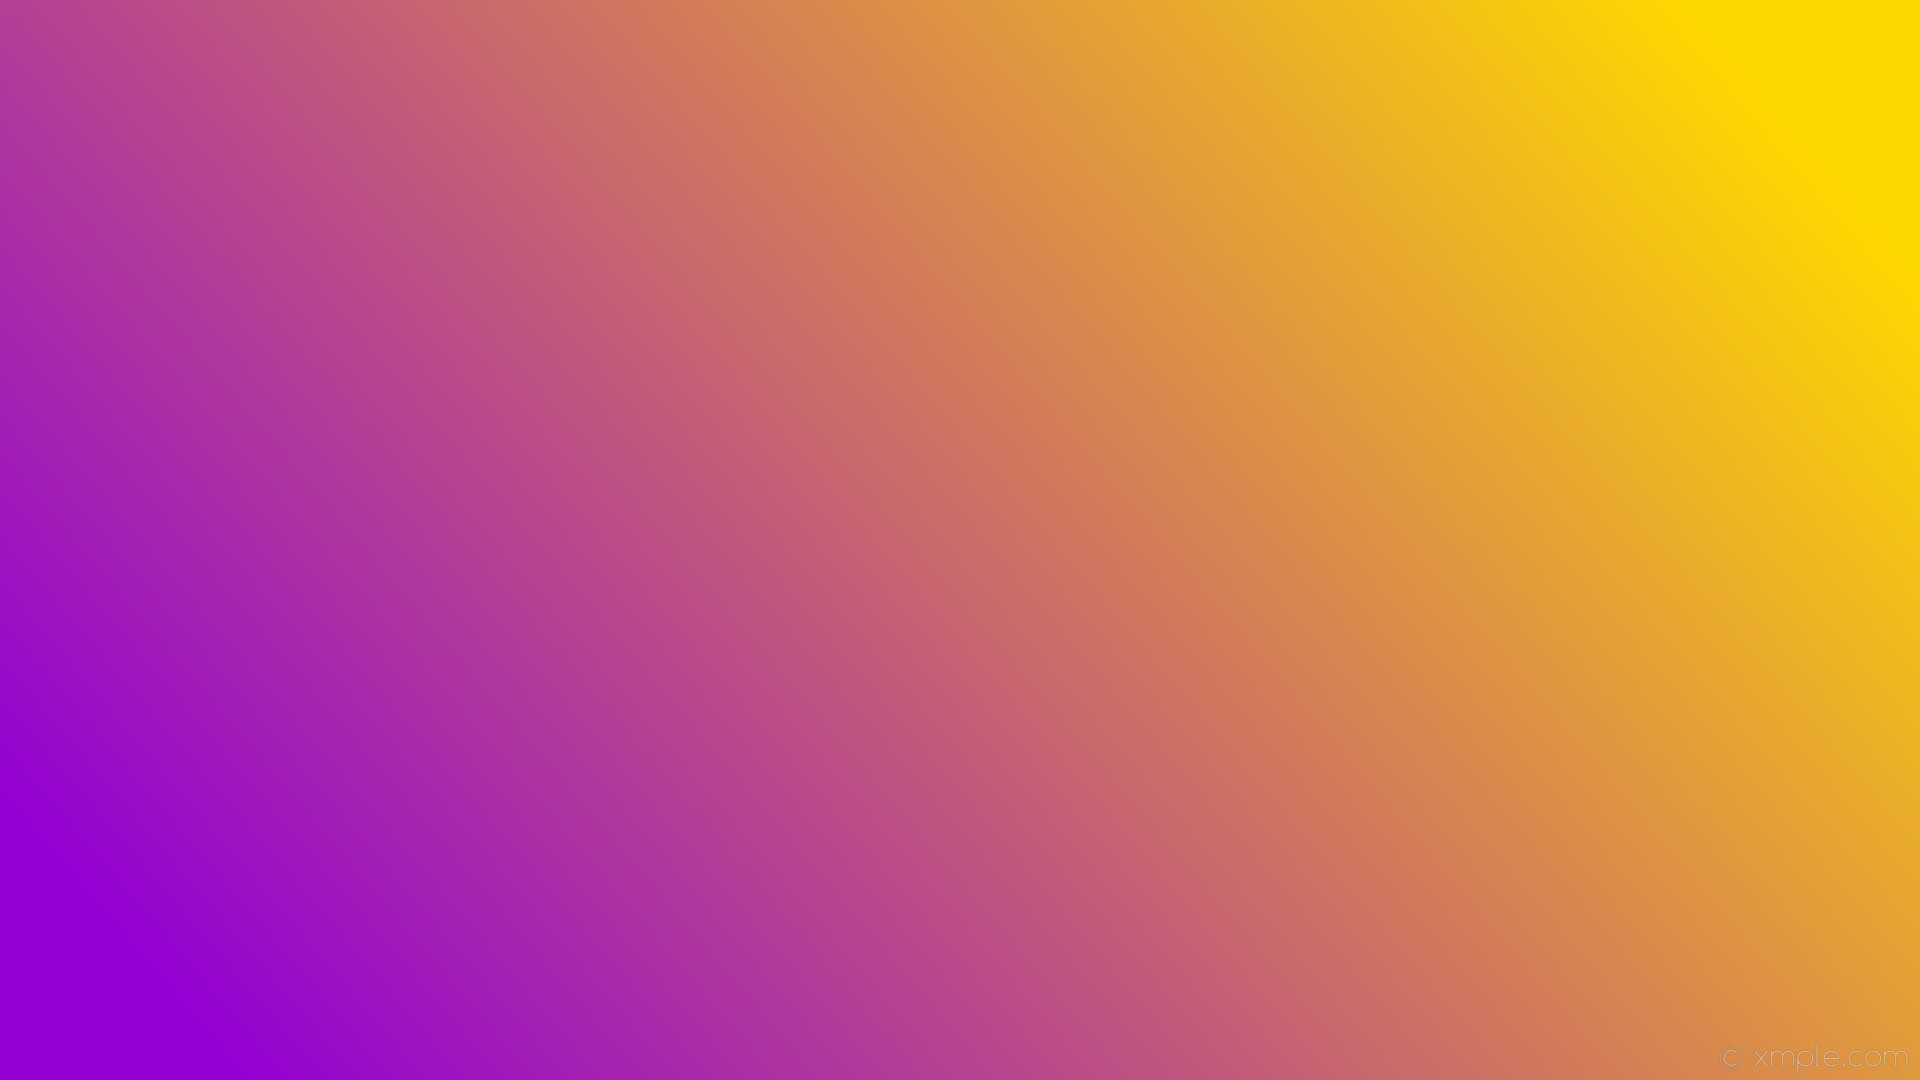 1920x1080 wallpaper linear yellow gradient purple gold dark violet #ffd700 #9400d3 15Â°